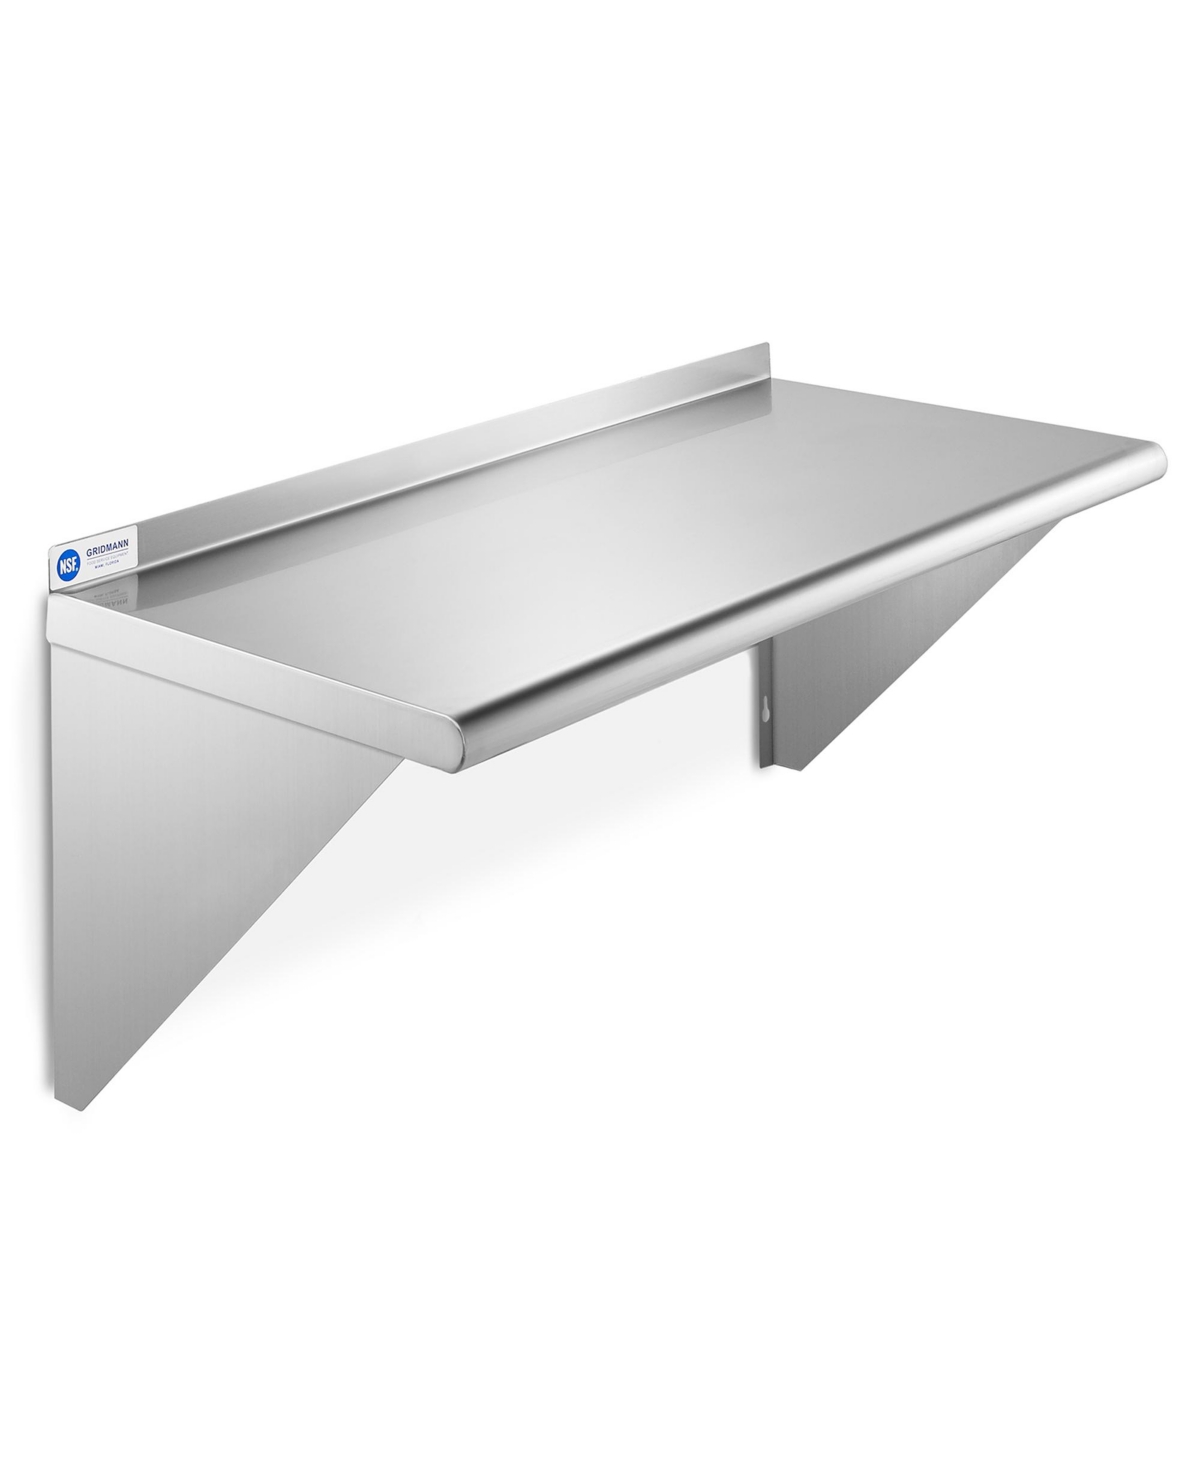 14" x 24" Nsf Stainless Steel Kitchen Wall Mount Shelf w/ Backsplash - Silver